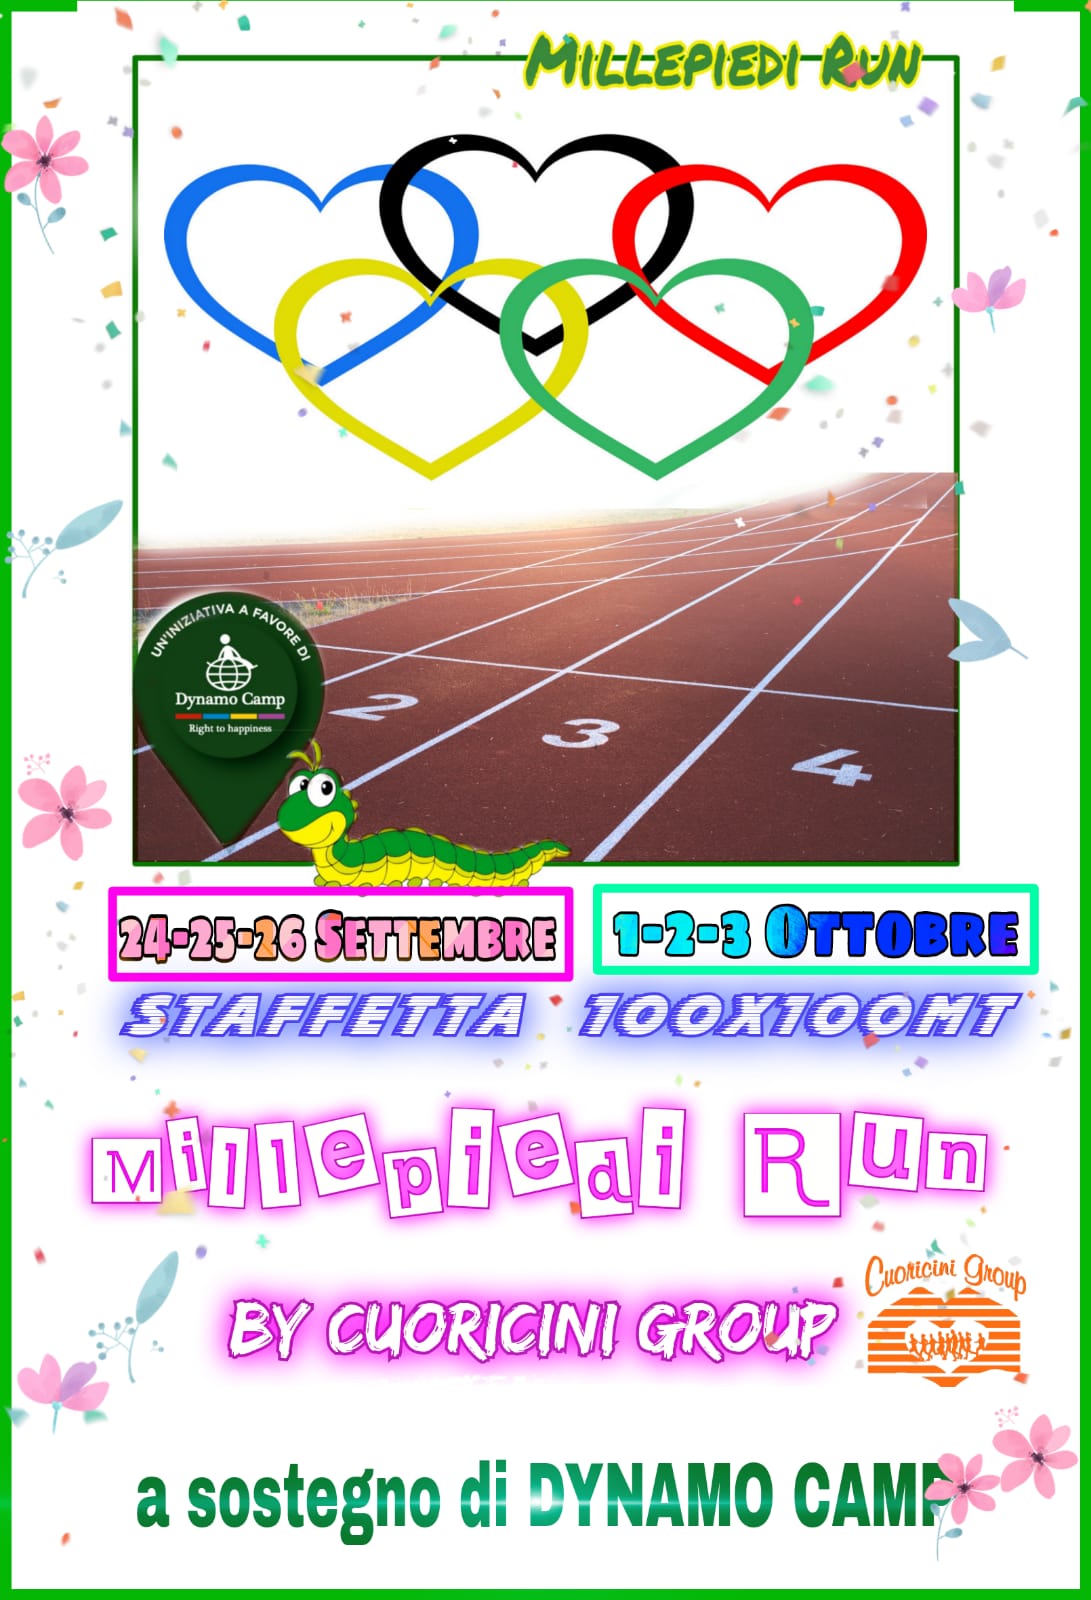 Cover MILLEPIEDI OLYMPIC RUN 2021